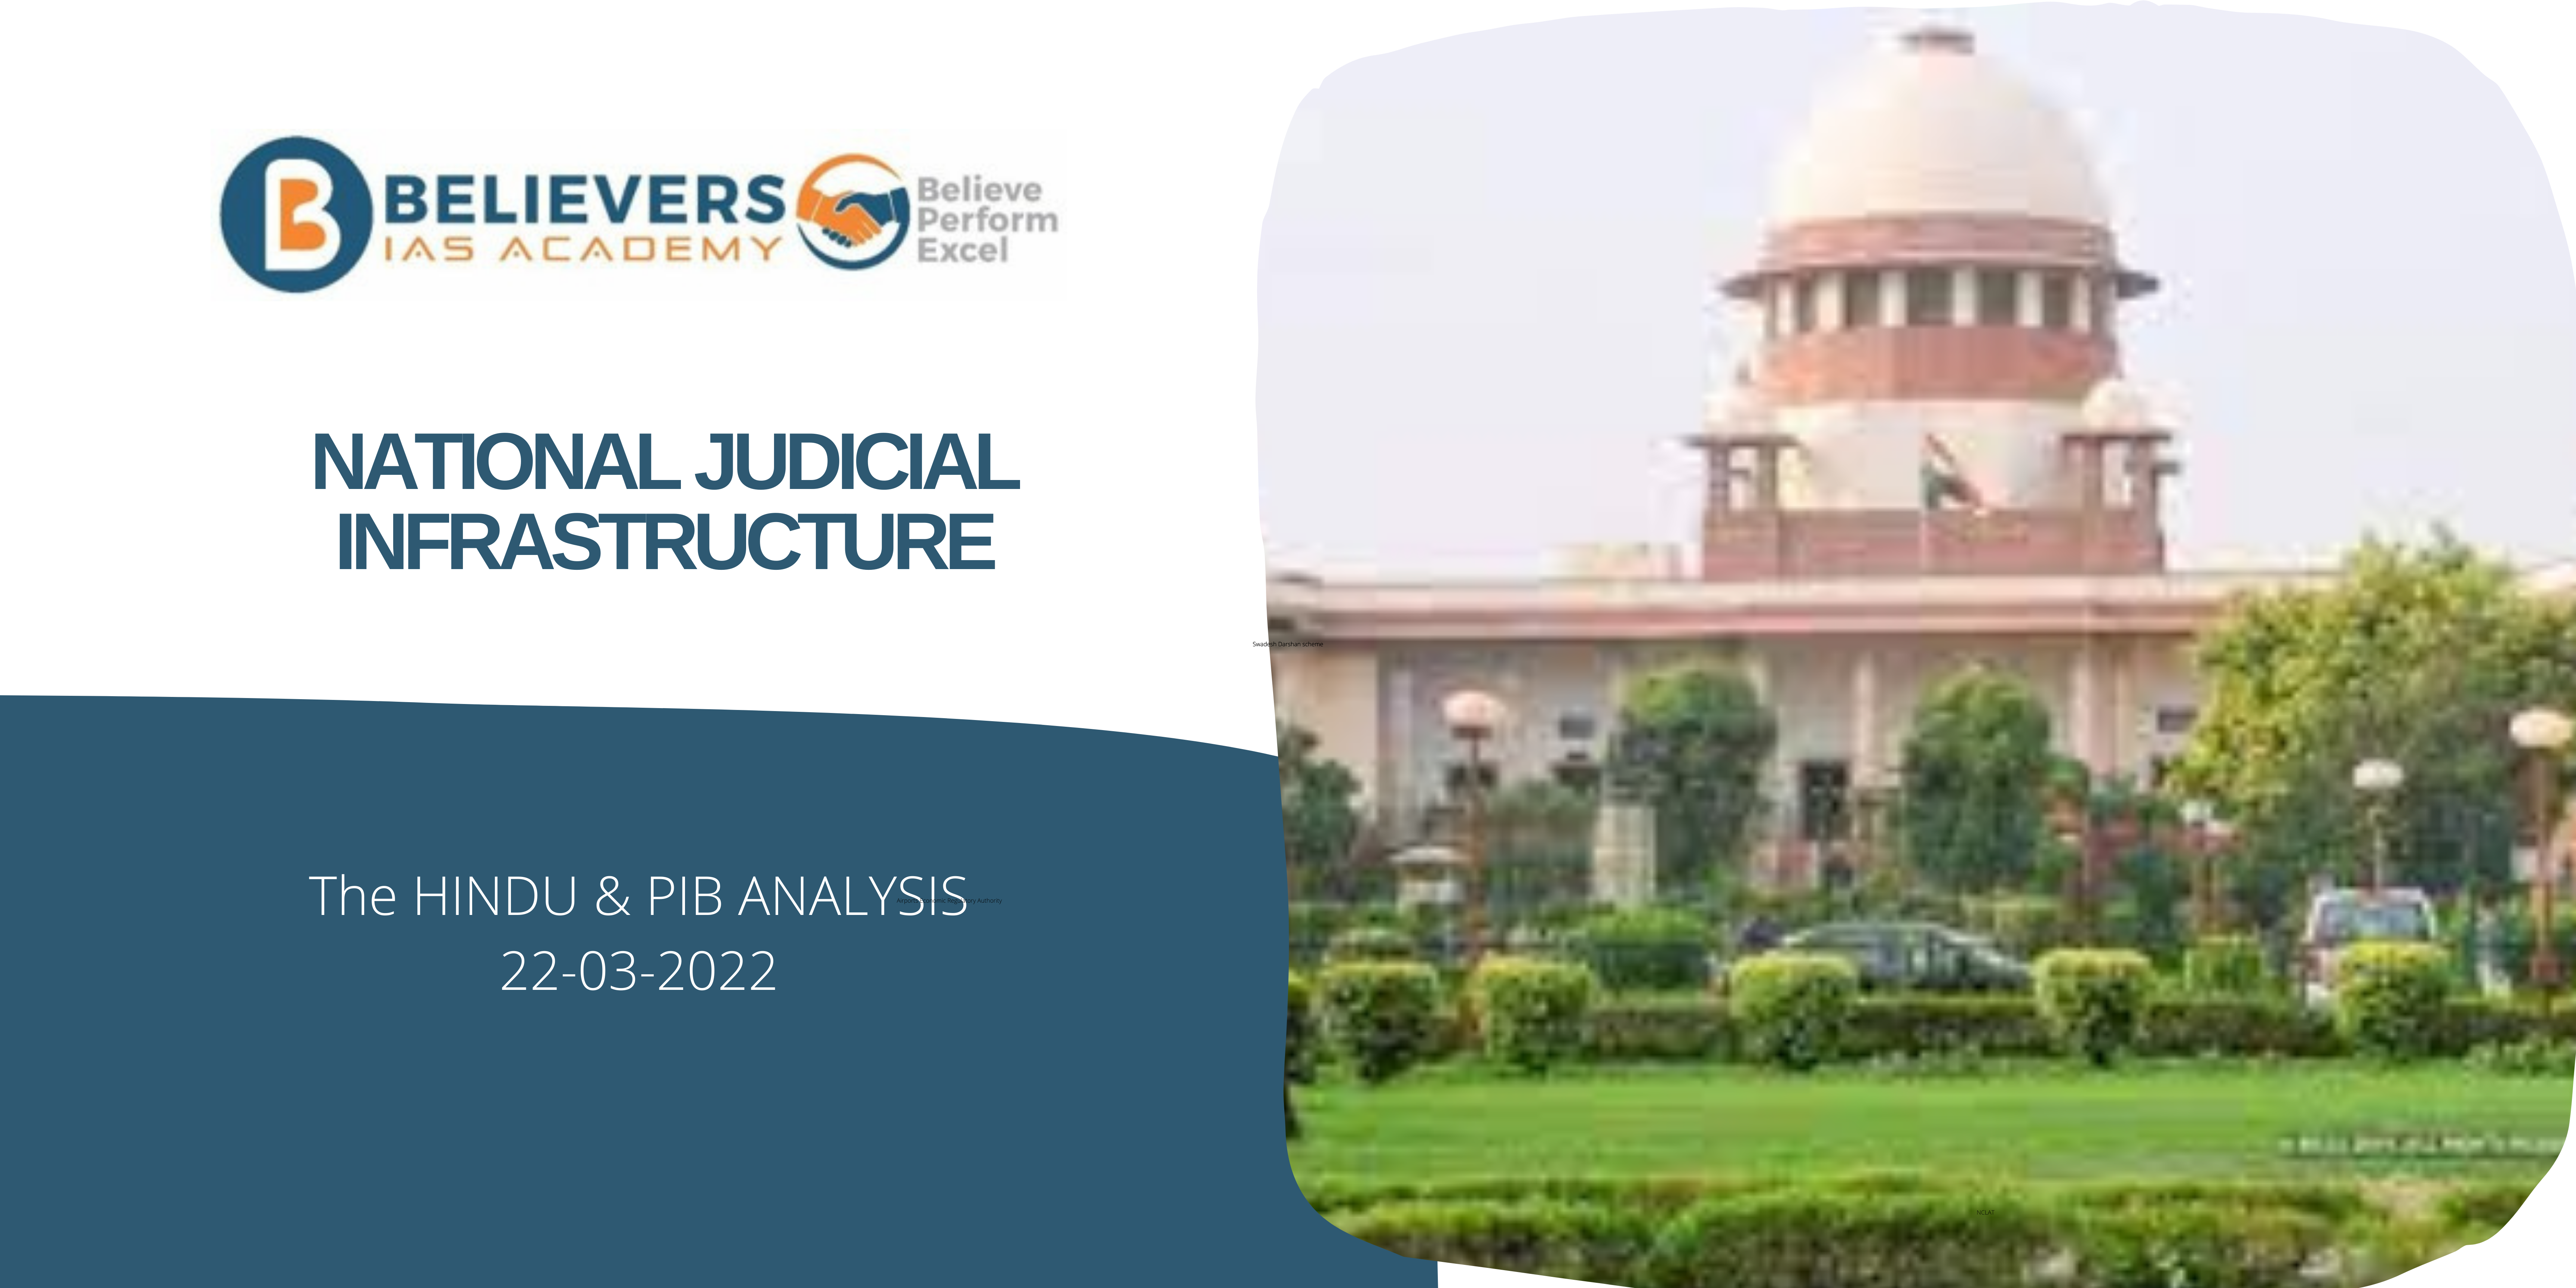 UPSC Current affairs - National Judicial Infrastructure